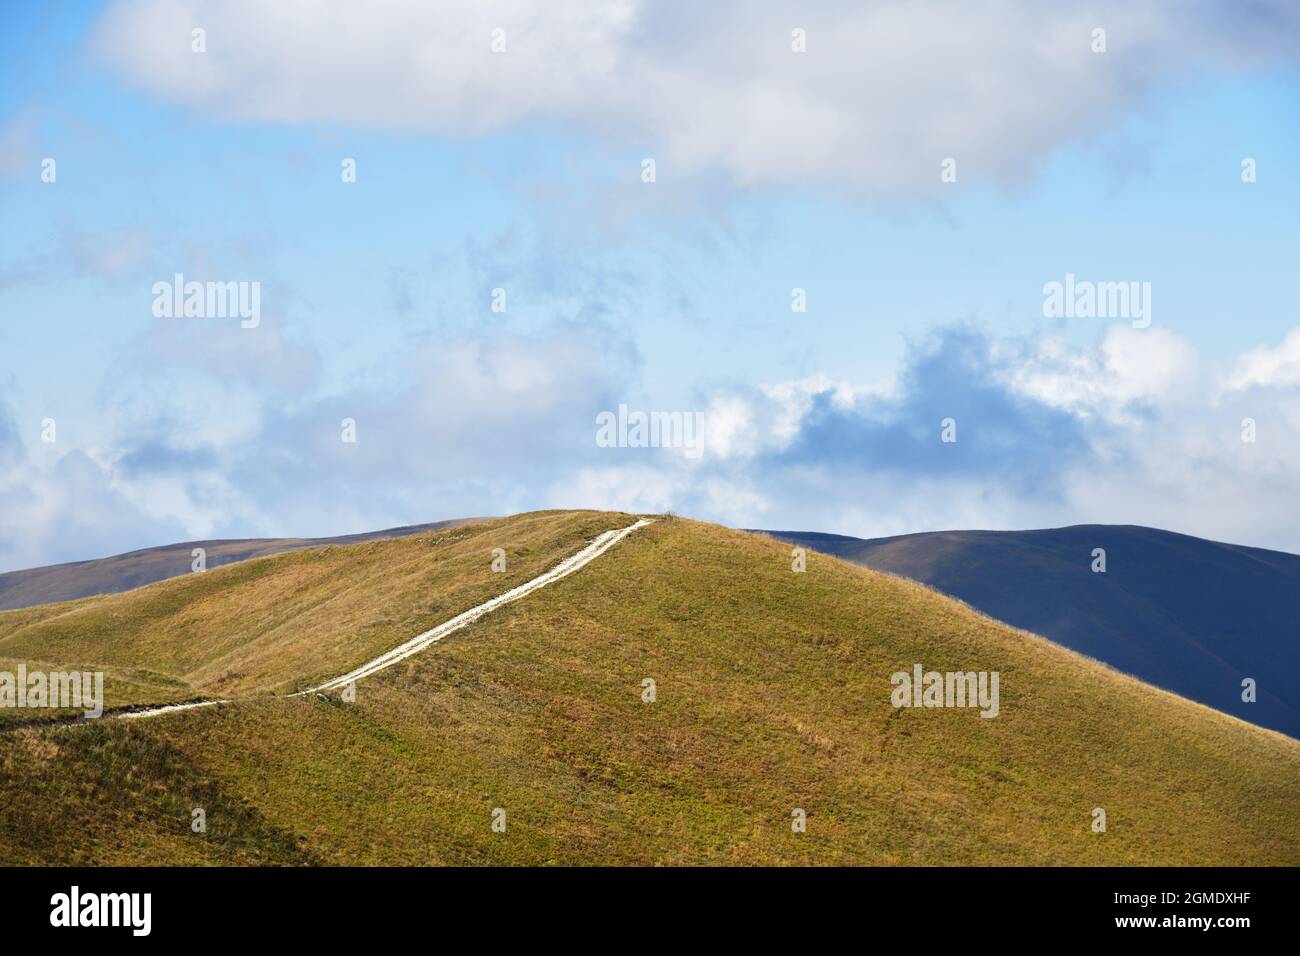 Caucasus alpine meadow and mountains landscape in Chechnya, Russia. Vedeno district of the Chechen Republic Stock Photo